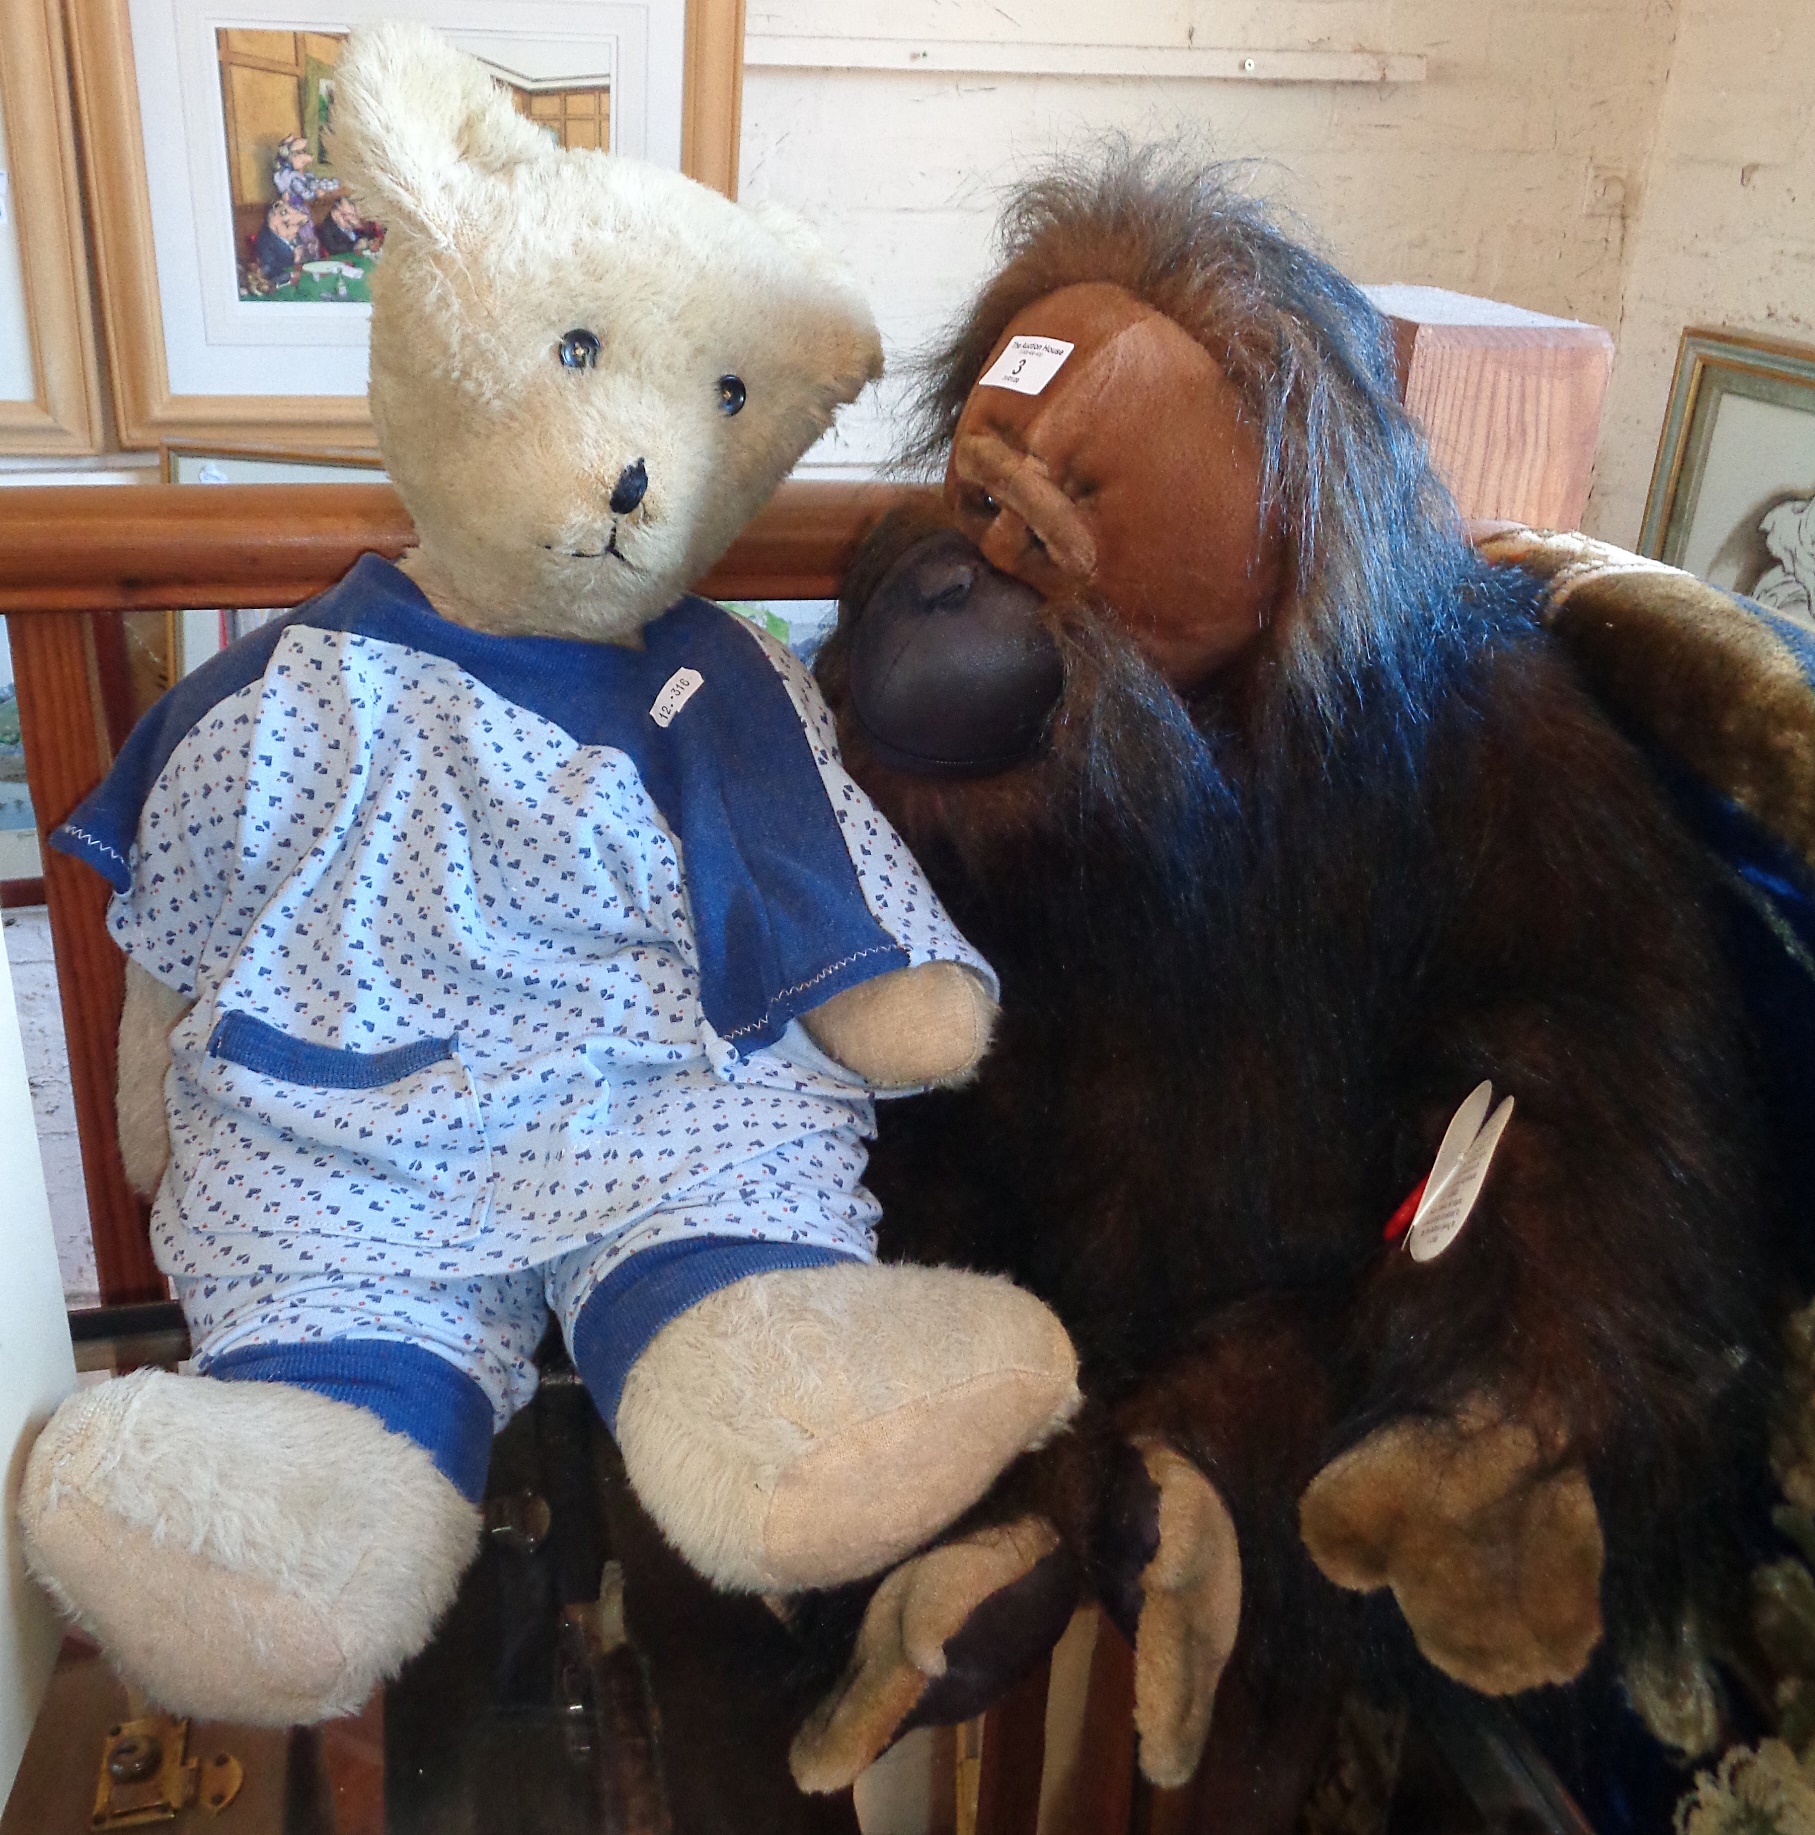 Large soft Keel Toy Company toy orangutan and a Teddy Bear